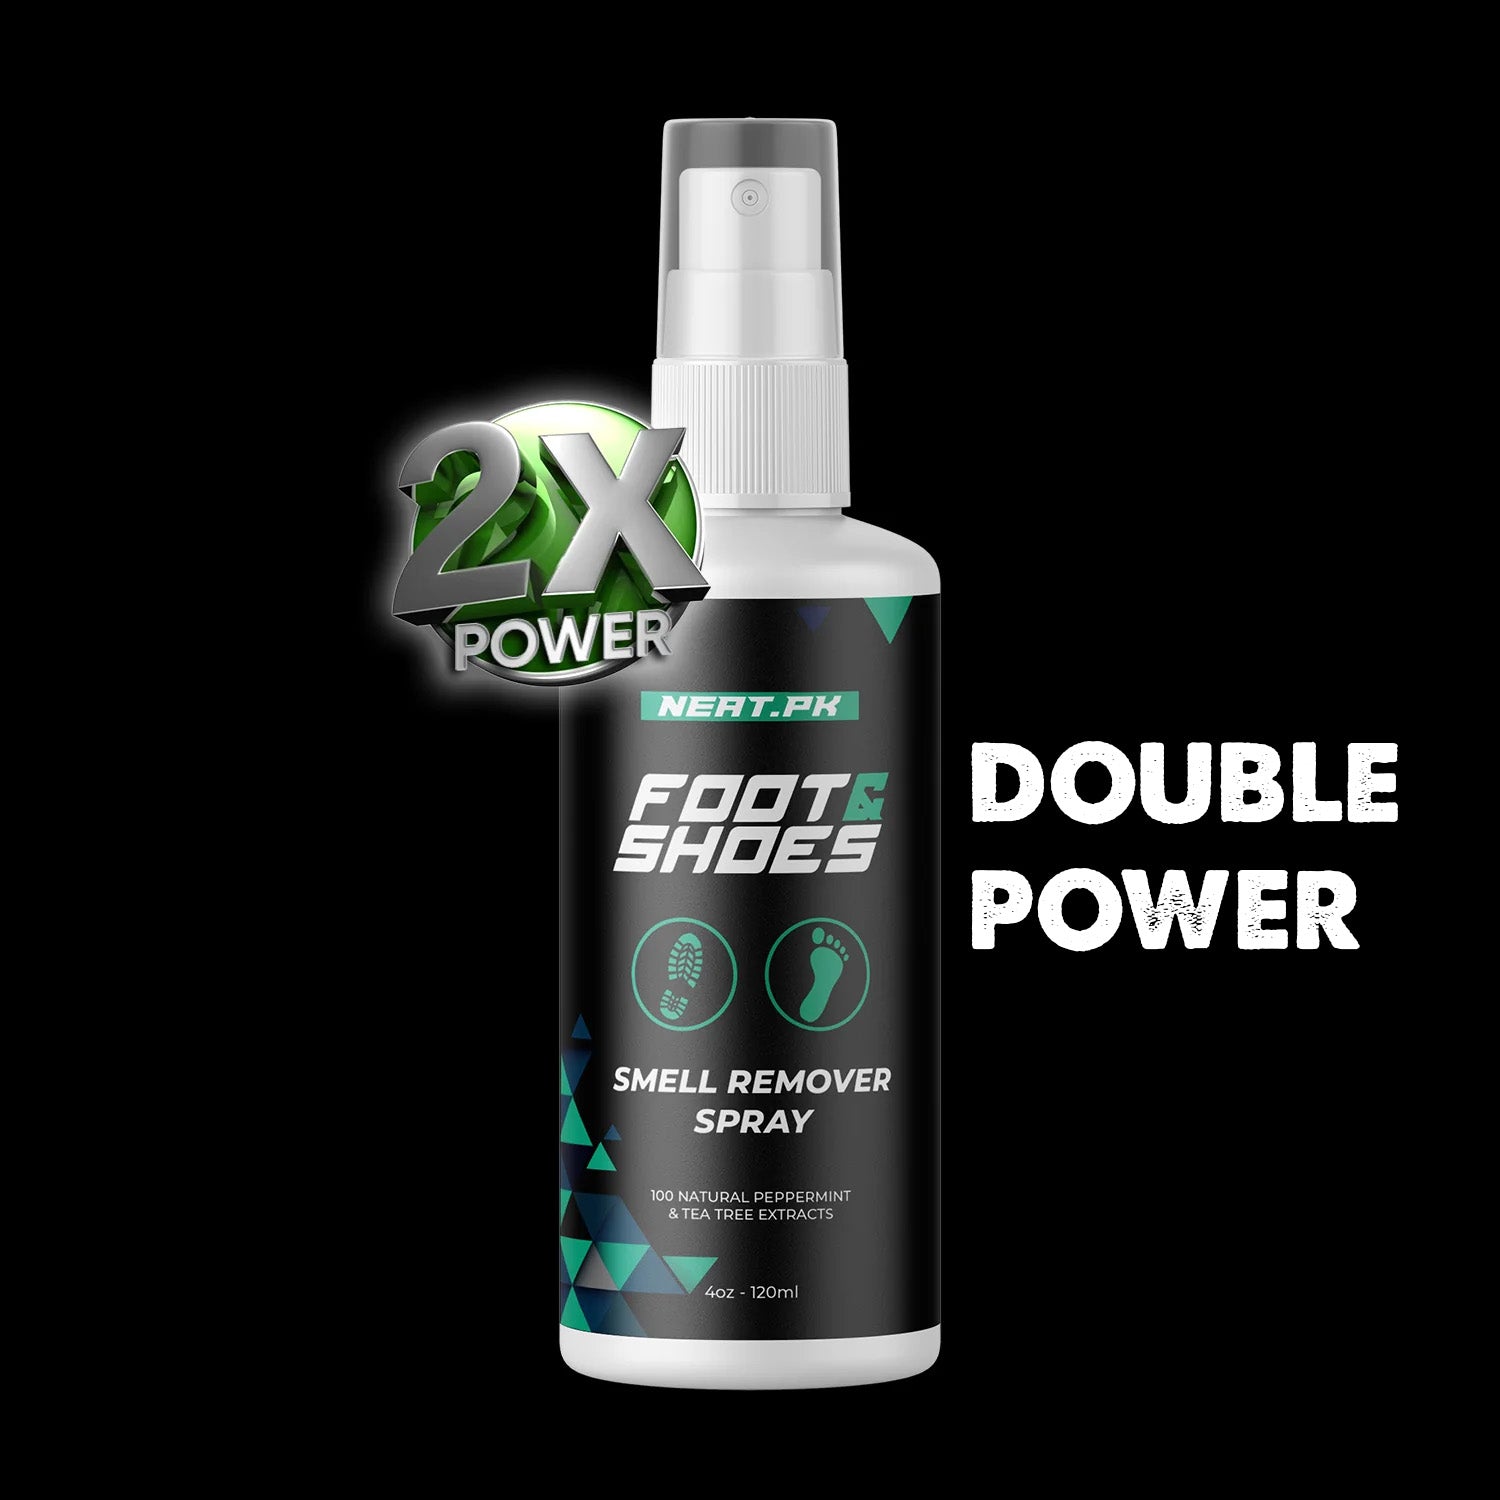 Foot & Shoe Spray 2X Power